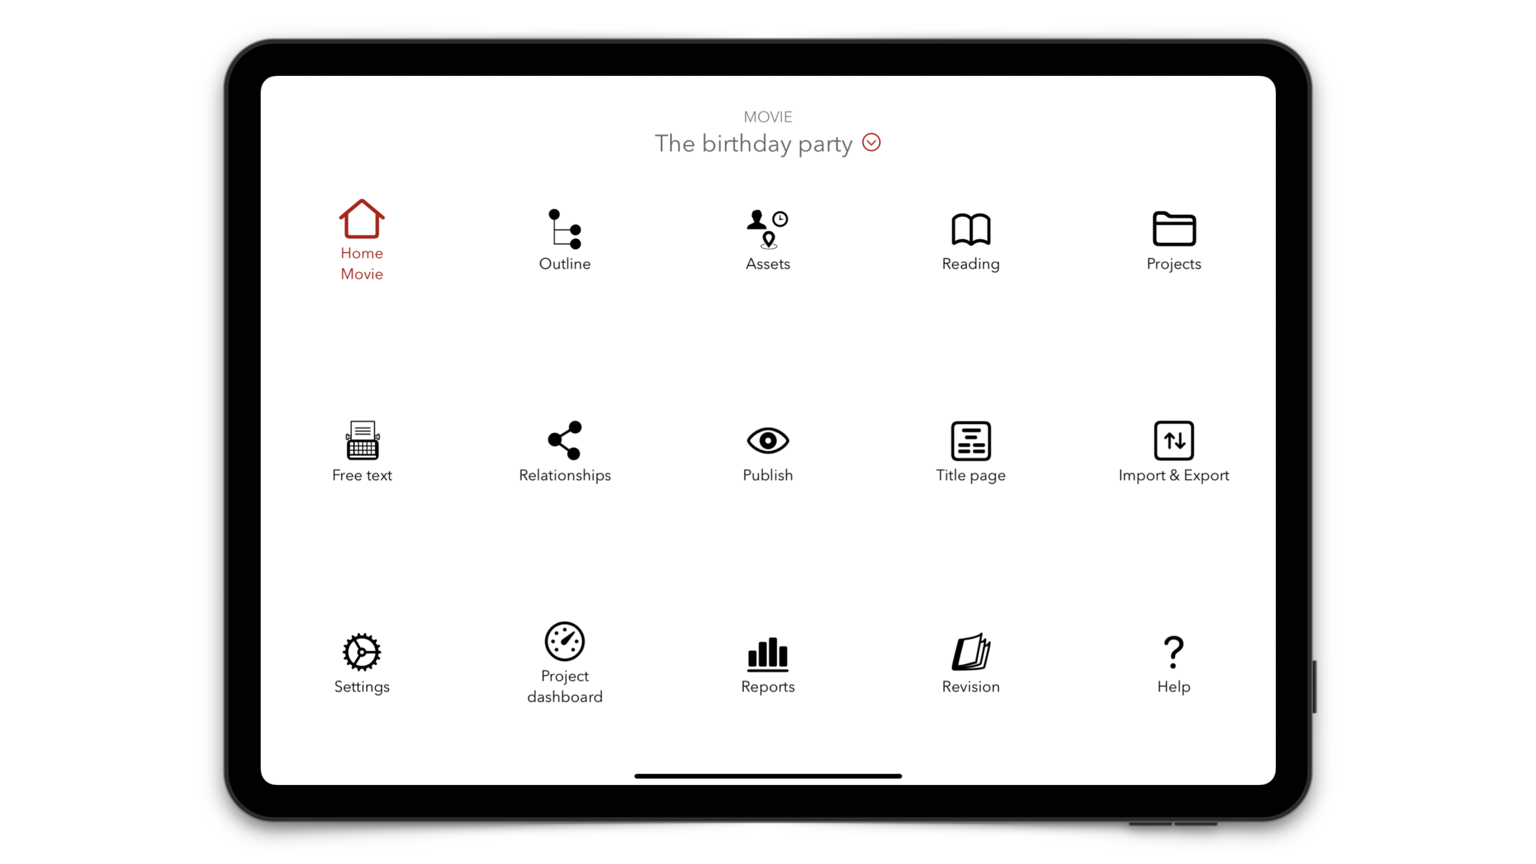 TwelvePoint for iPad - The main menu